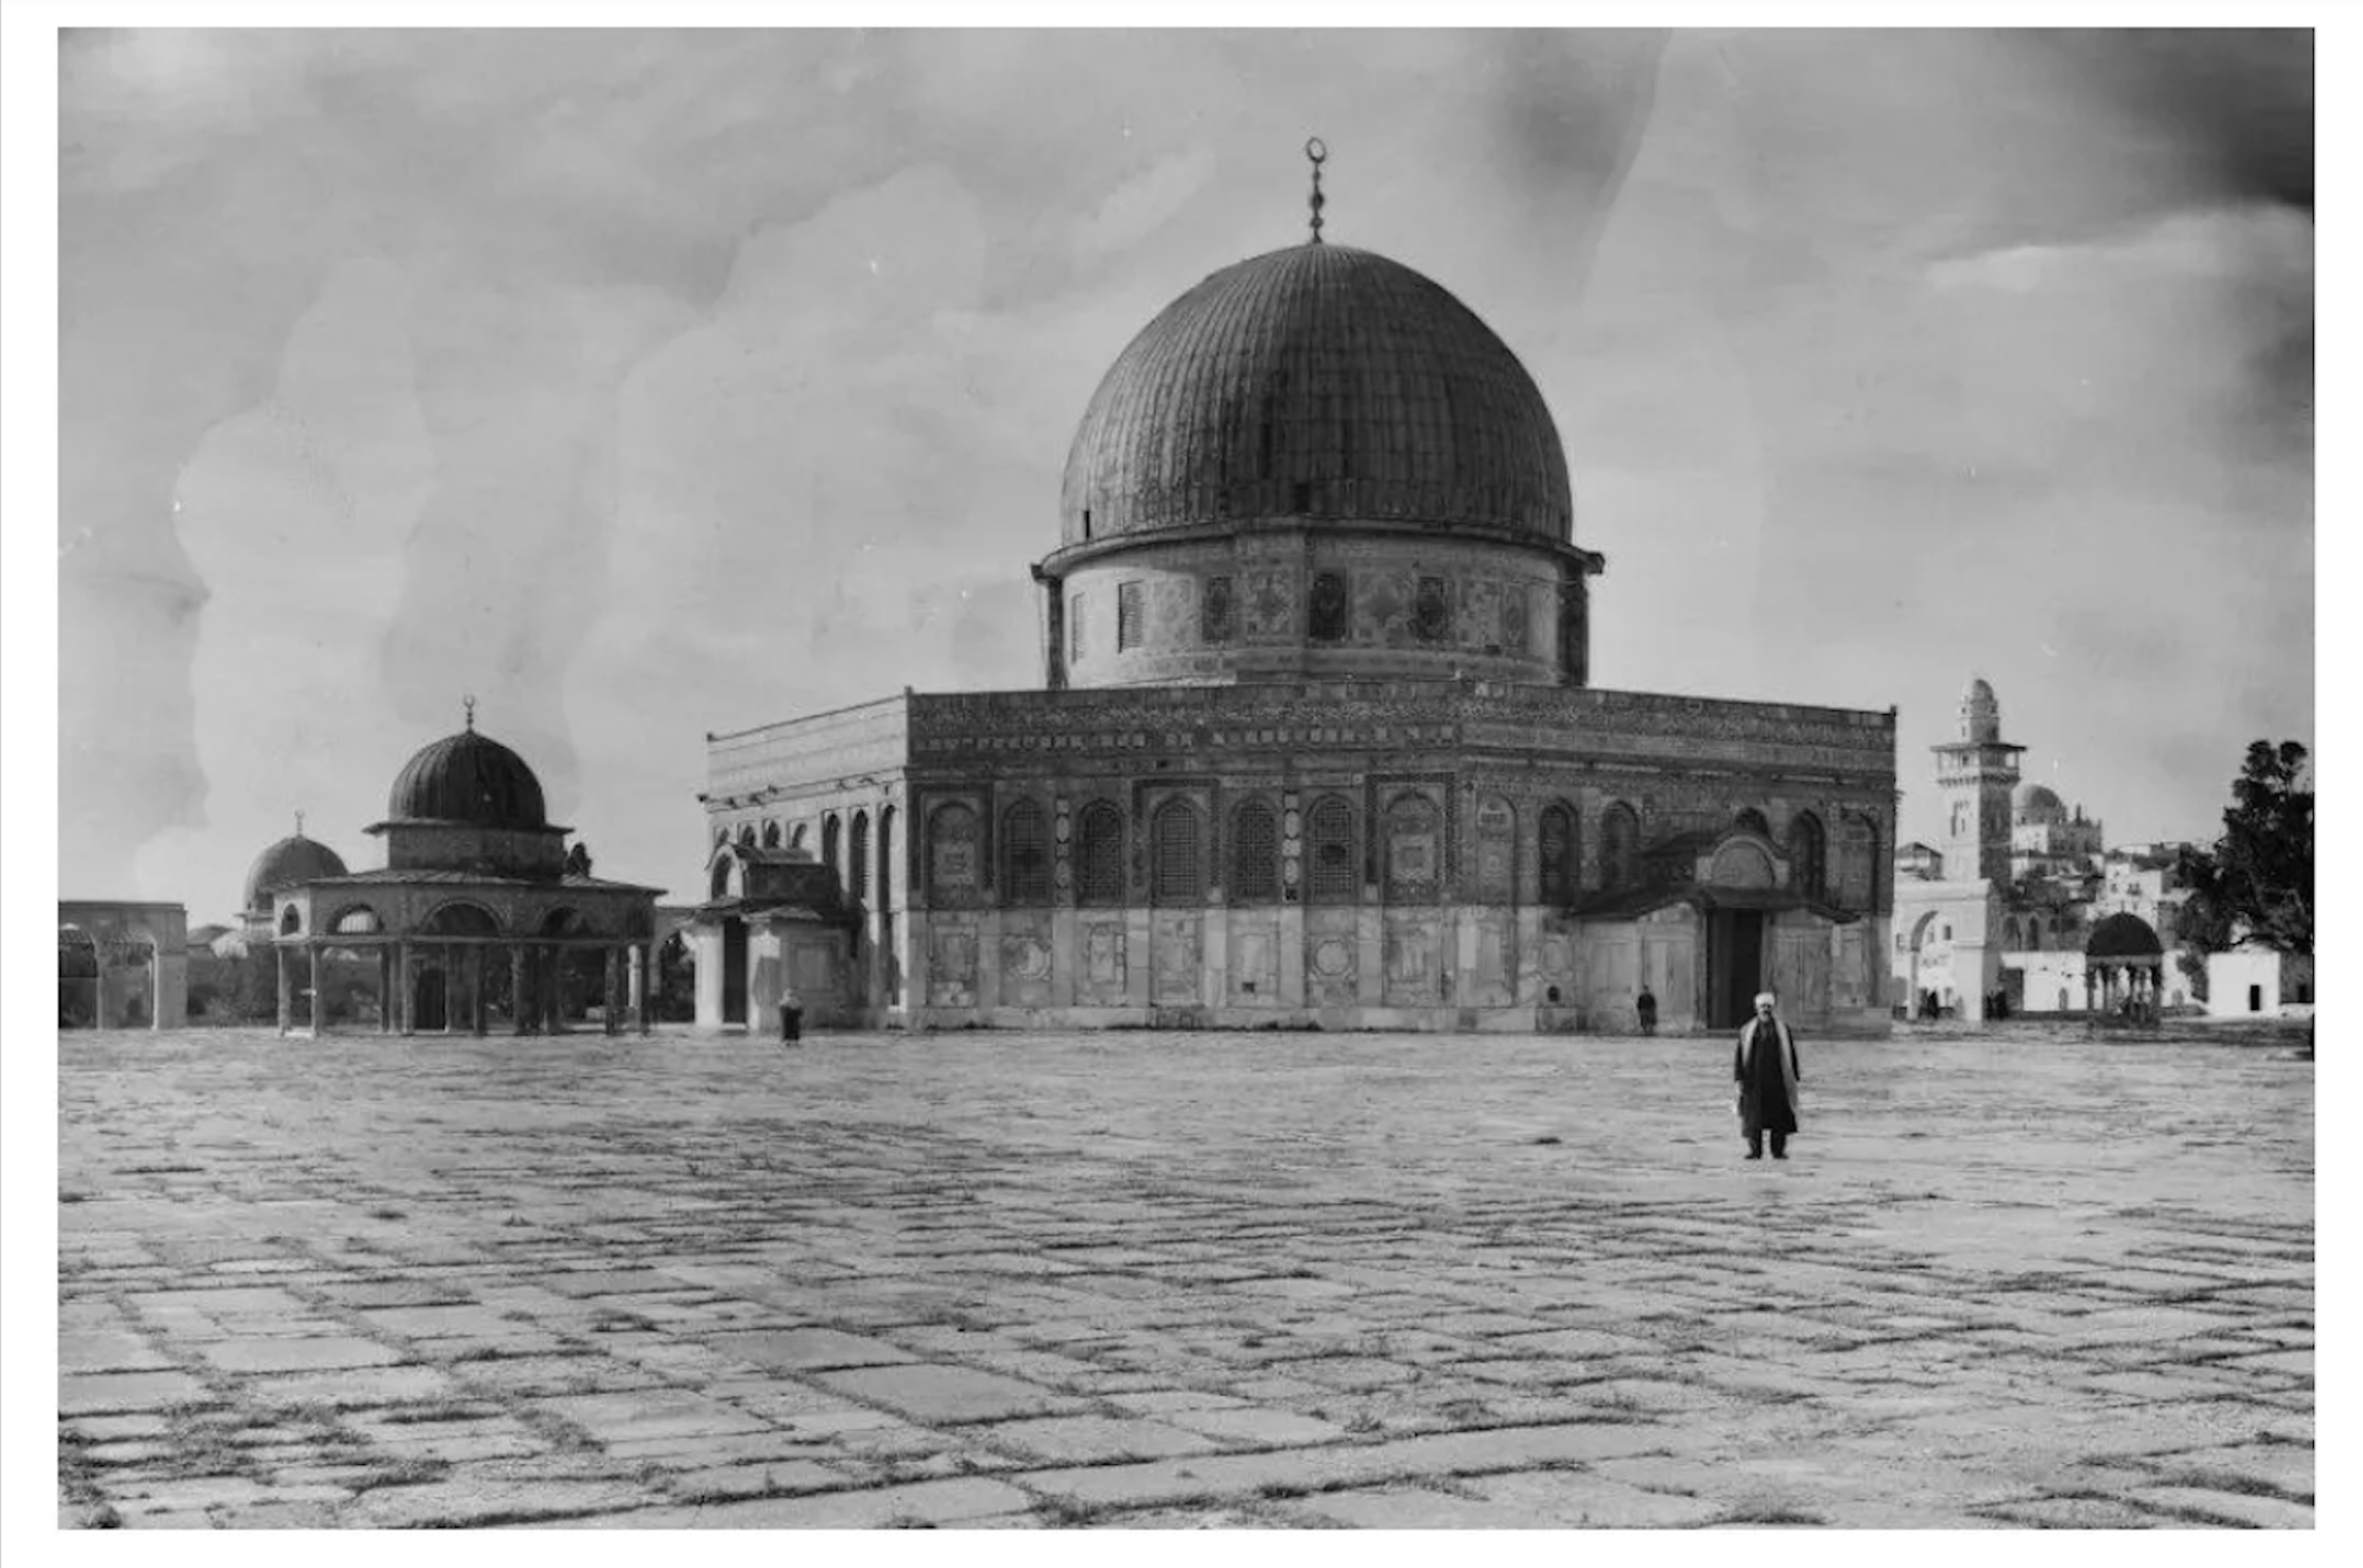 Historical image of al-Aqsa Mosque, Palestine